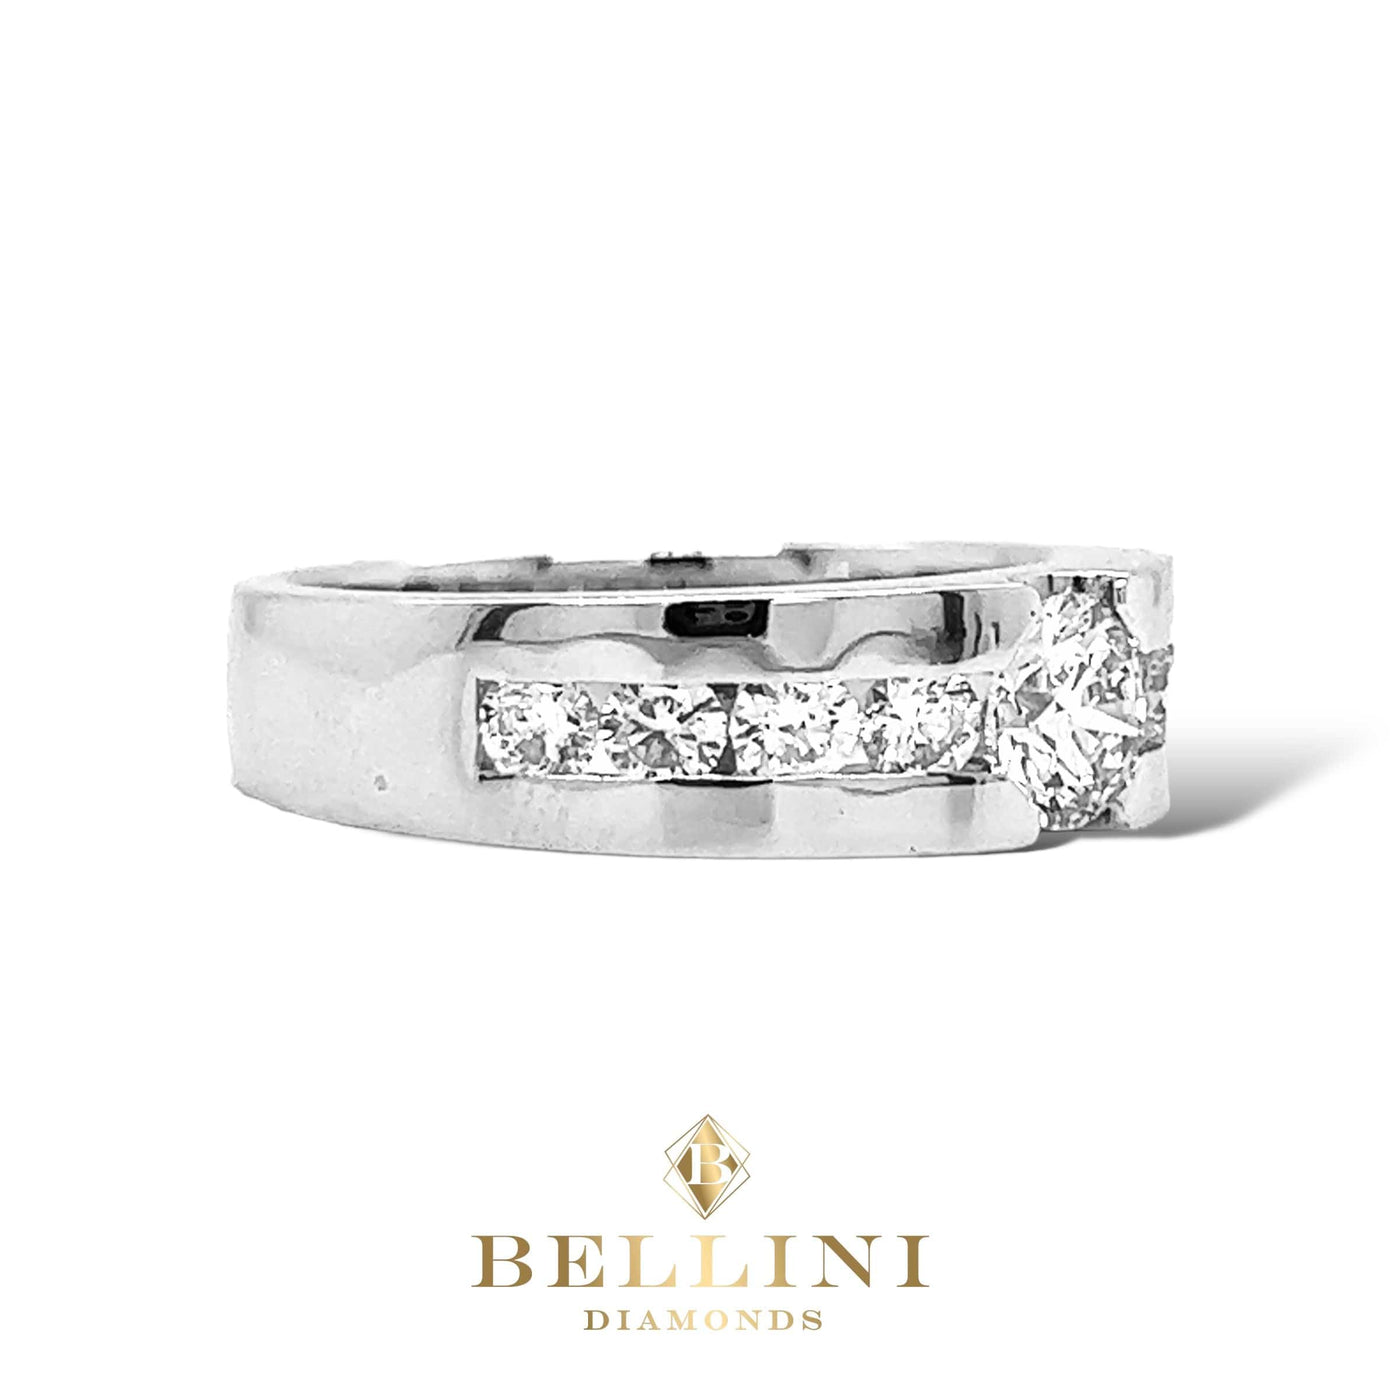 Bellini ring channel setting